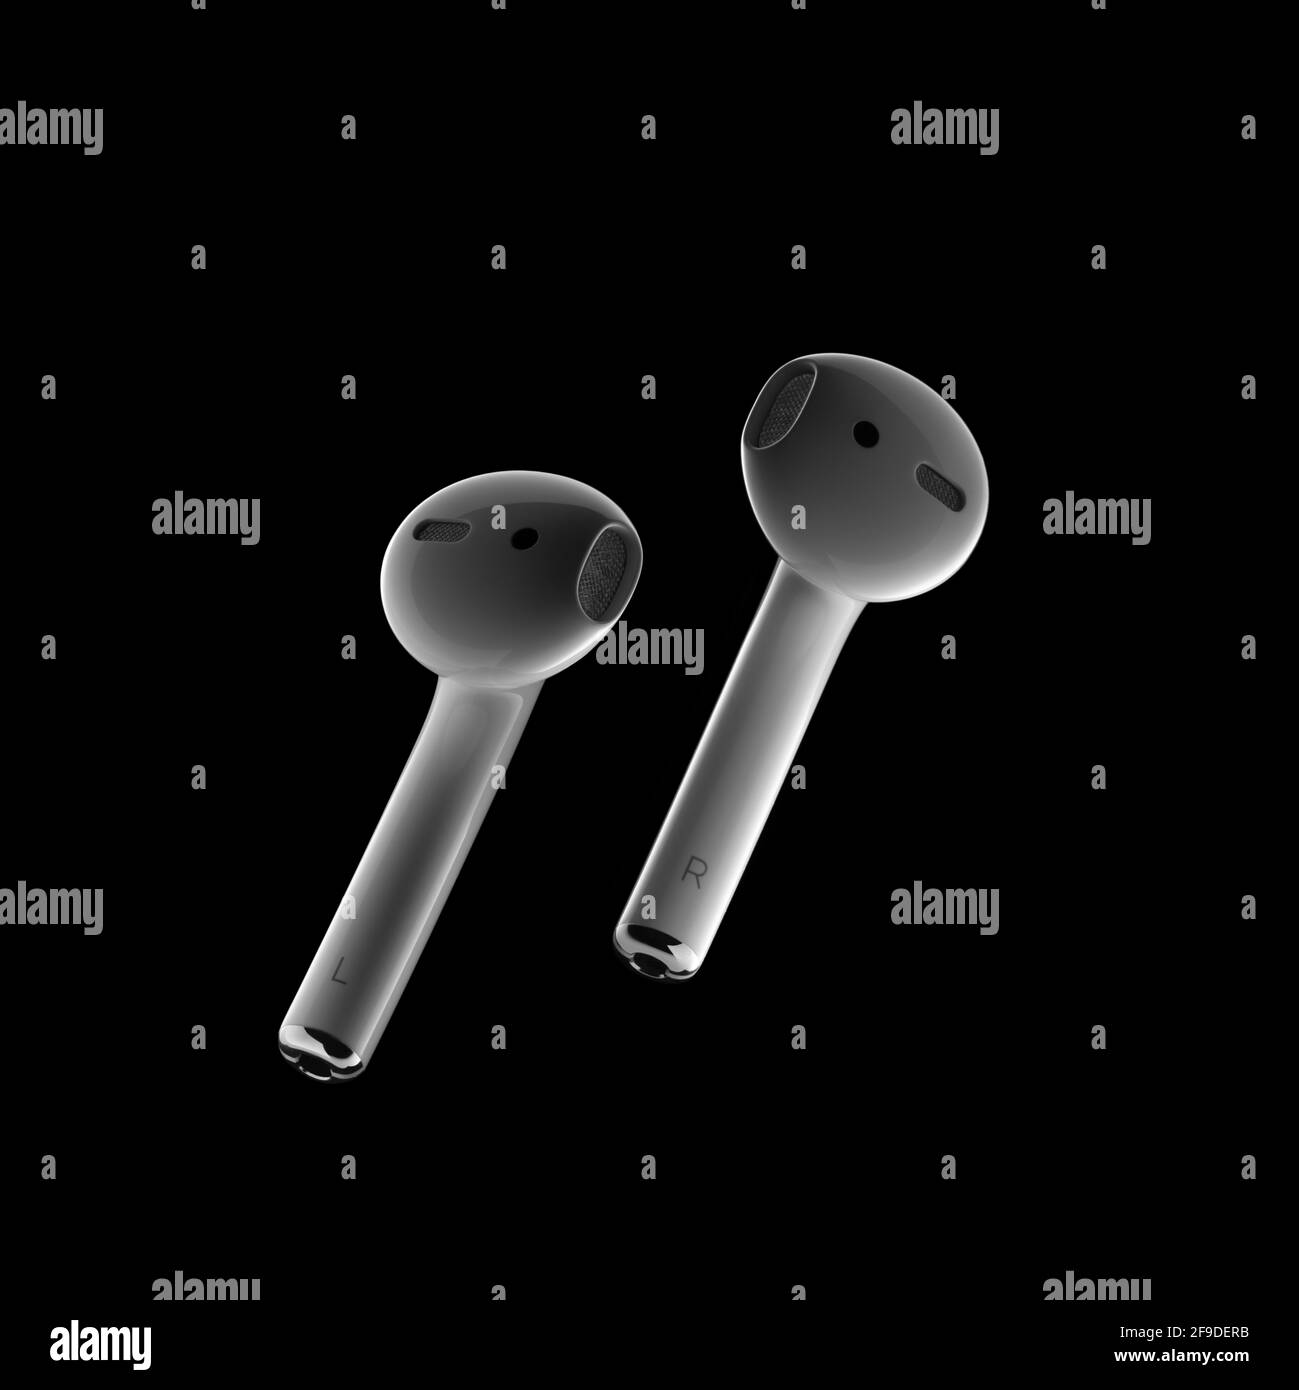 Apple 'AirPod' earphones on black background Stock Photo